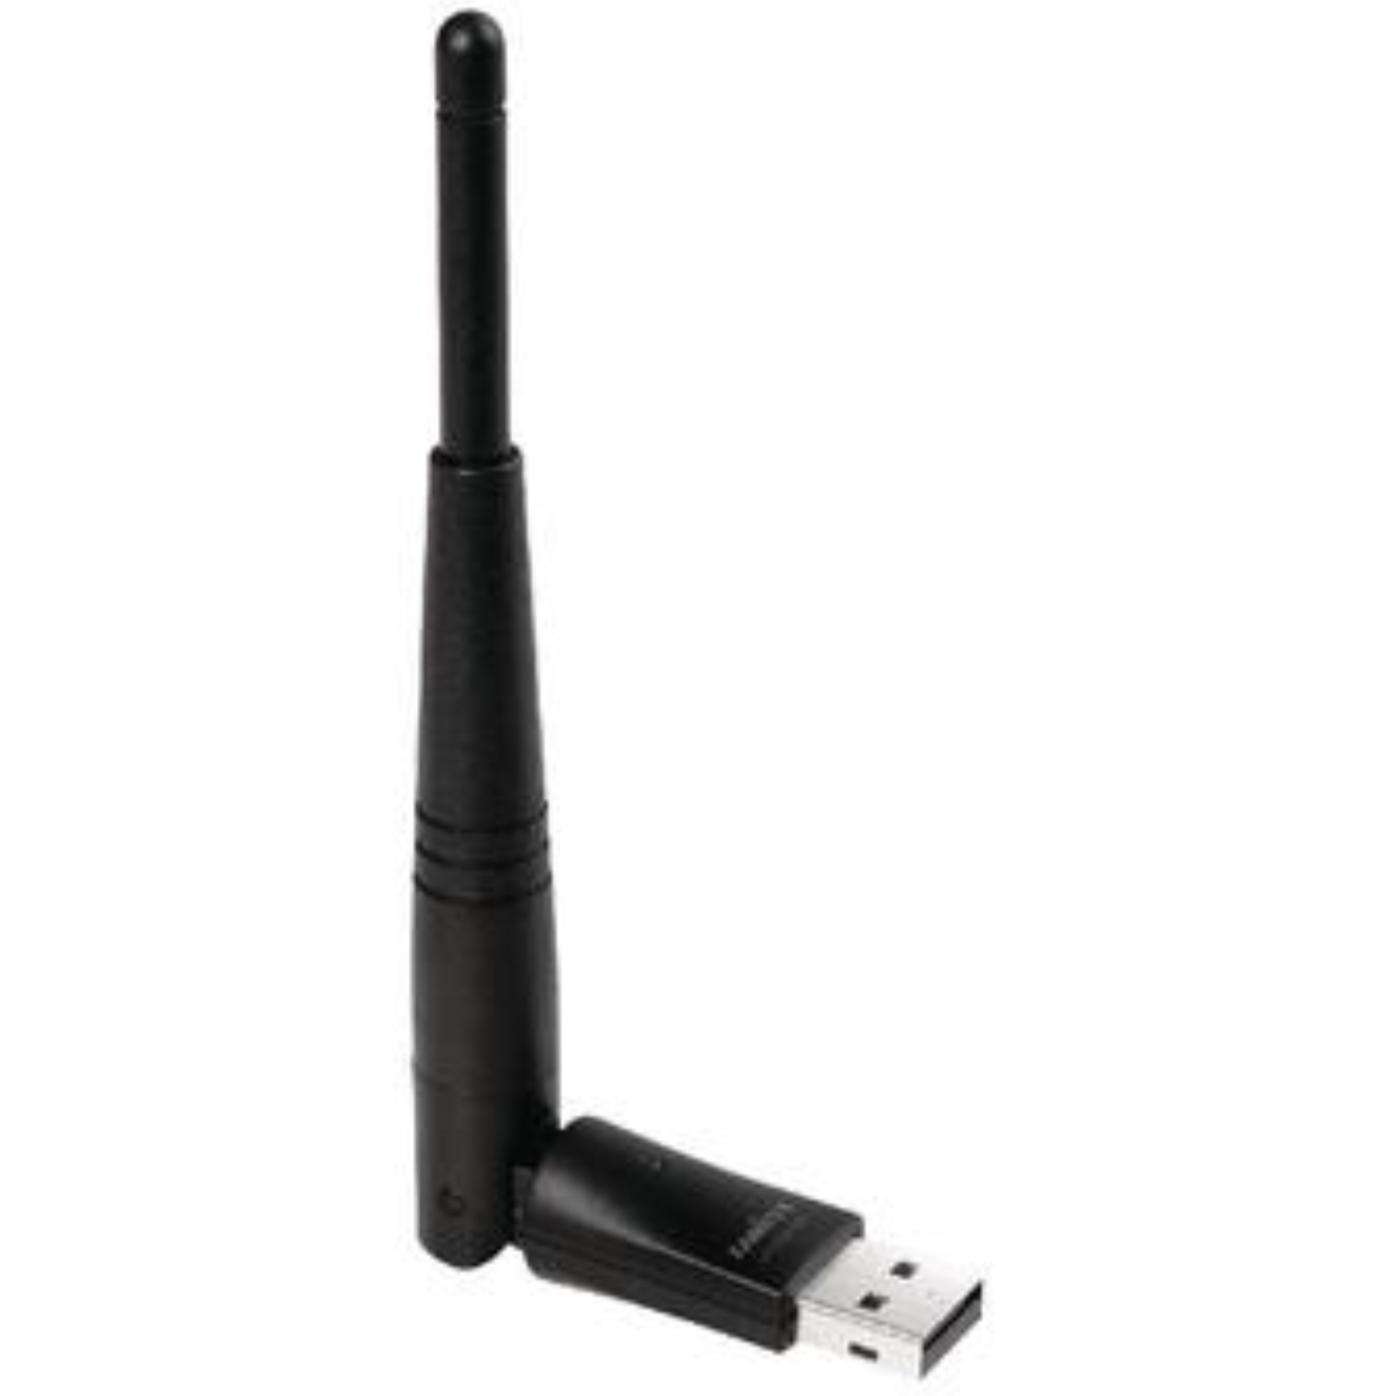 USB WLAN Adapter - Edimax